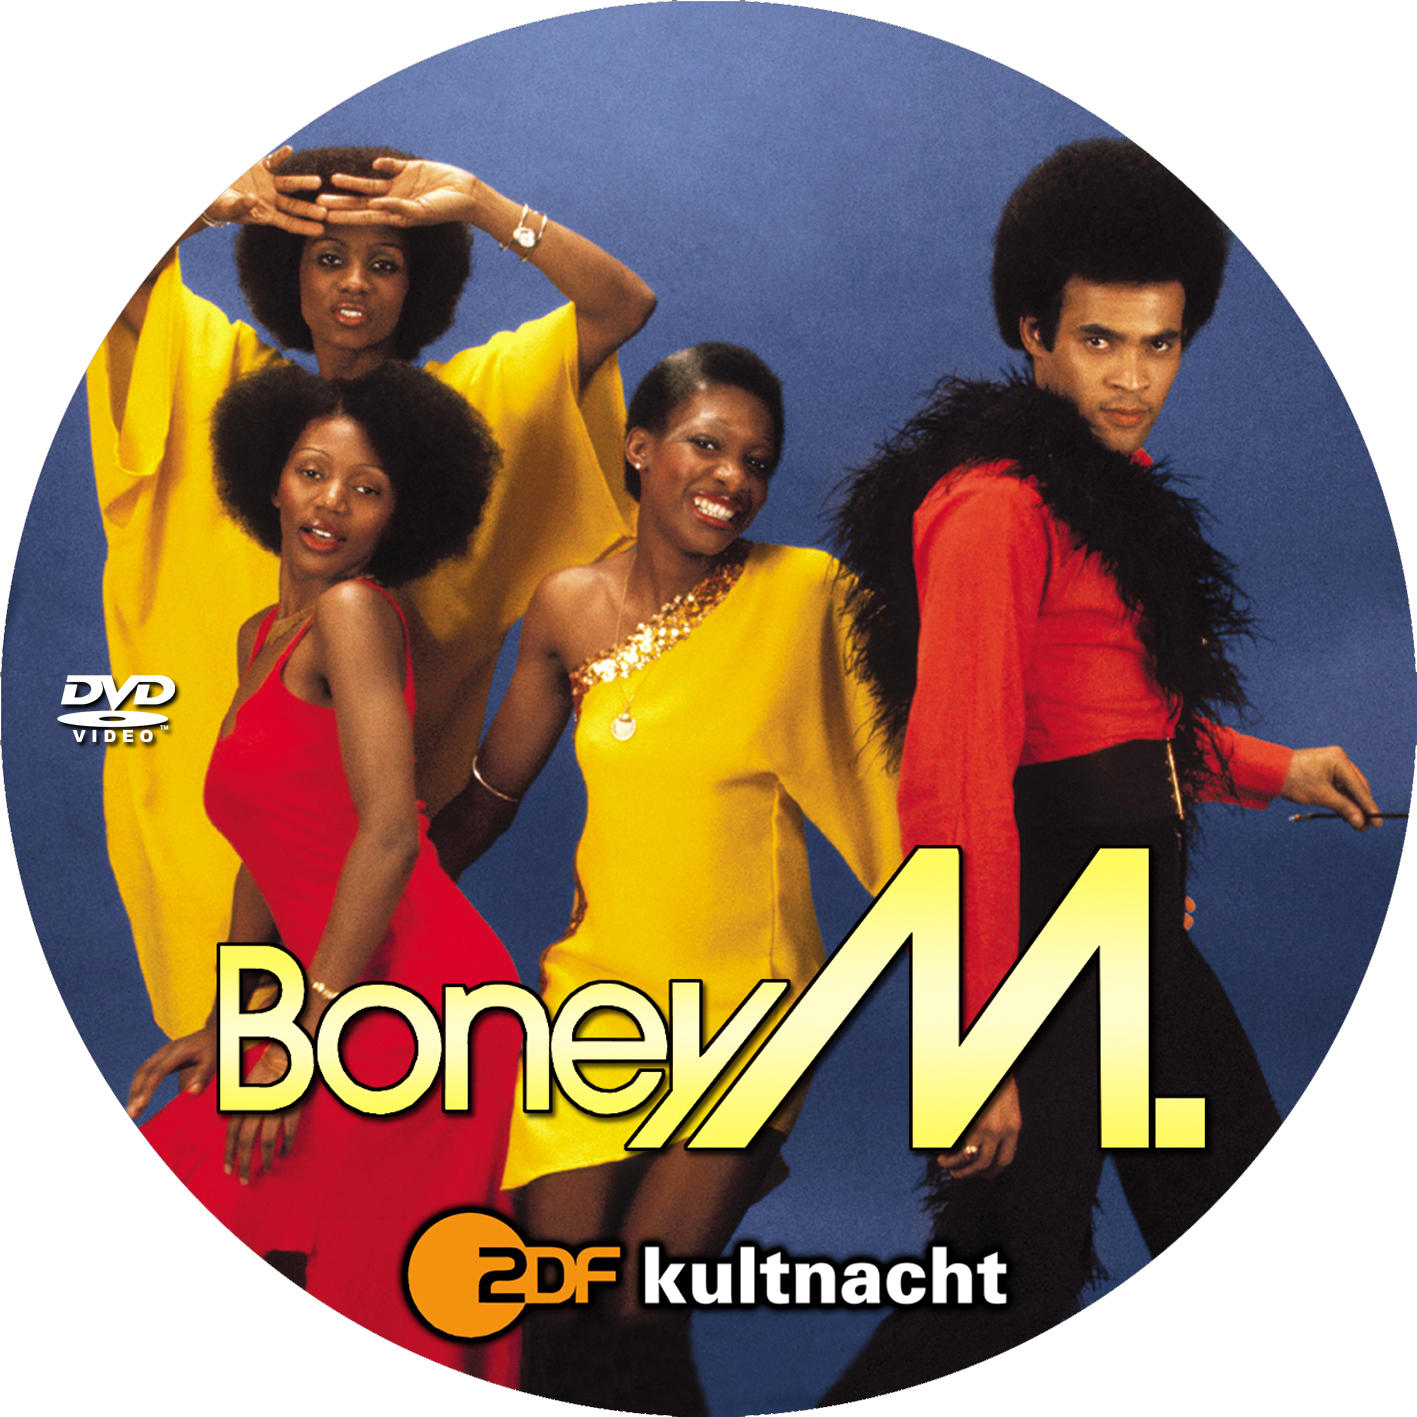 Boney m dance. Группа Boney m.. Группа Boney m. дискография. Группа Boney m. в 80. Группа Бони м 1975г.